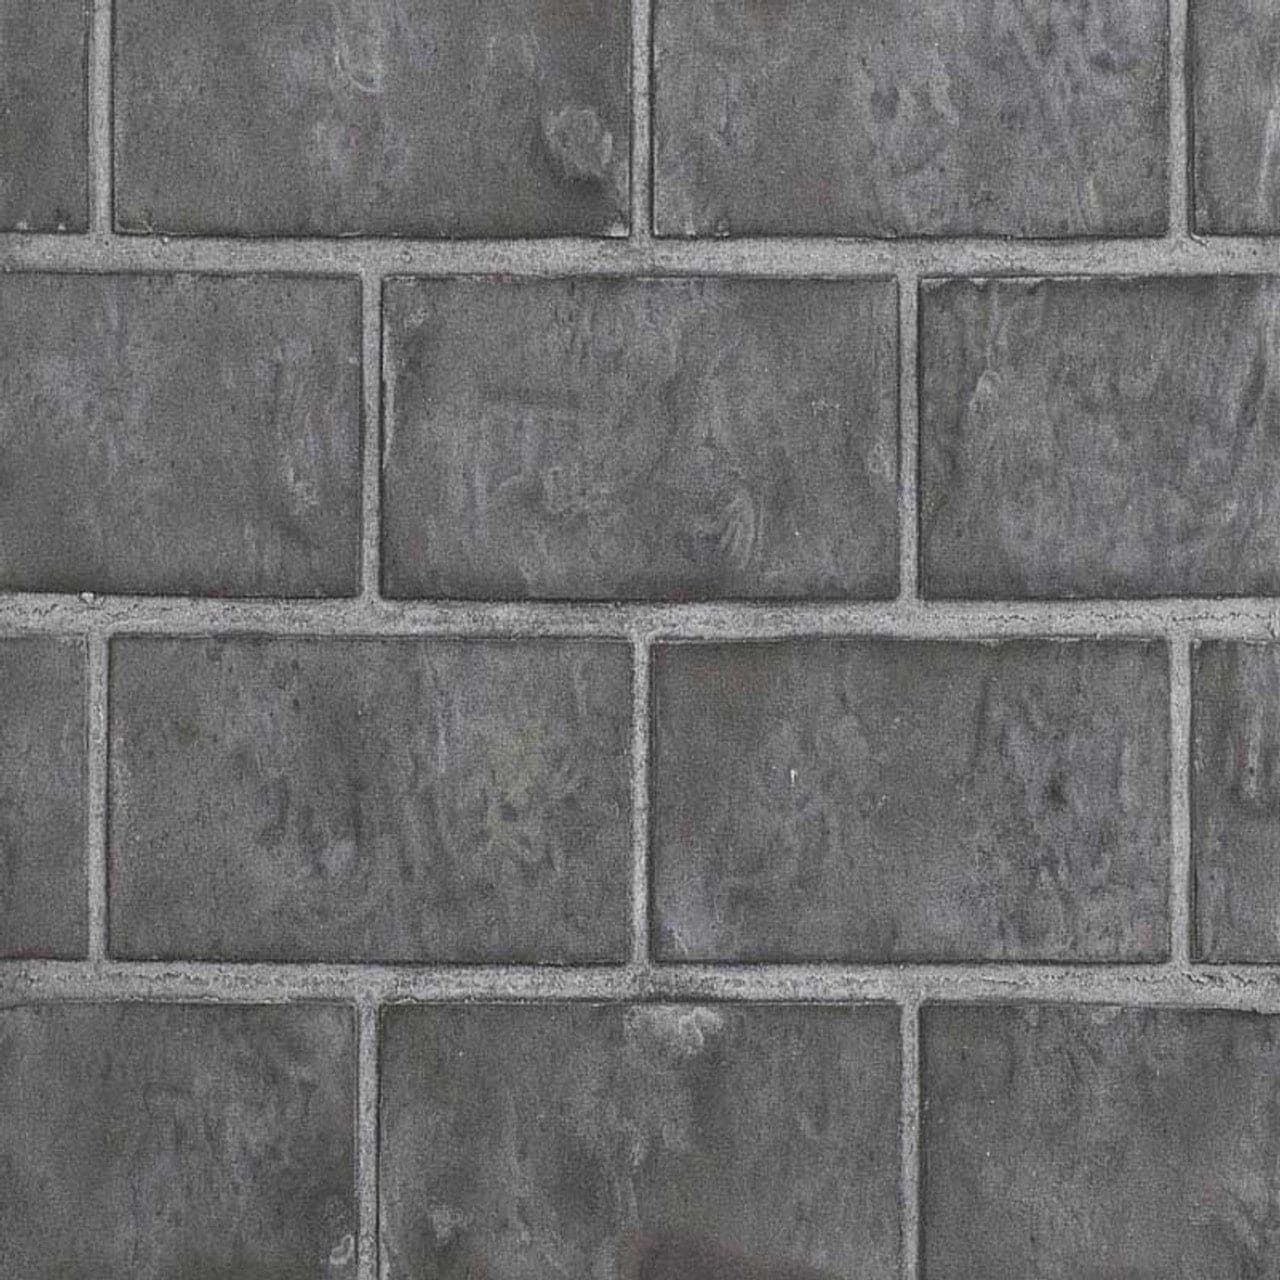 Decorative Brick Panels Westminster Grey Standard for Ascent X 42 - DBPX42WS - Chimney Cricket